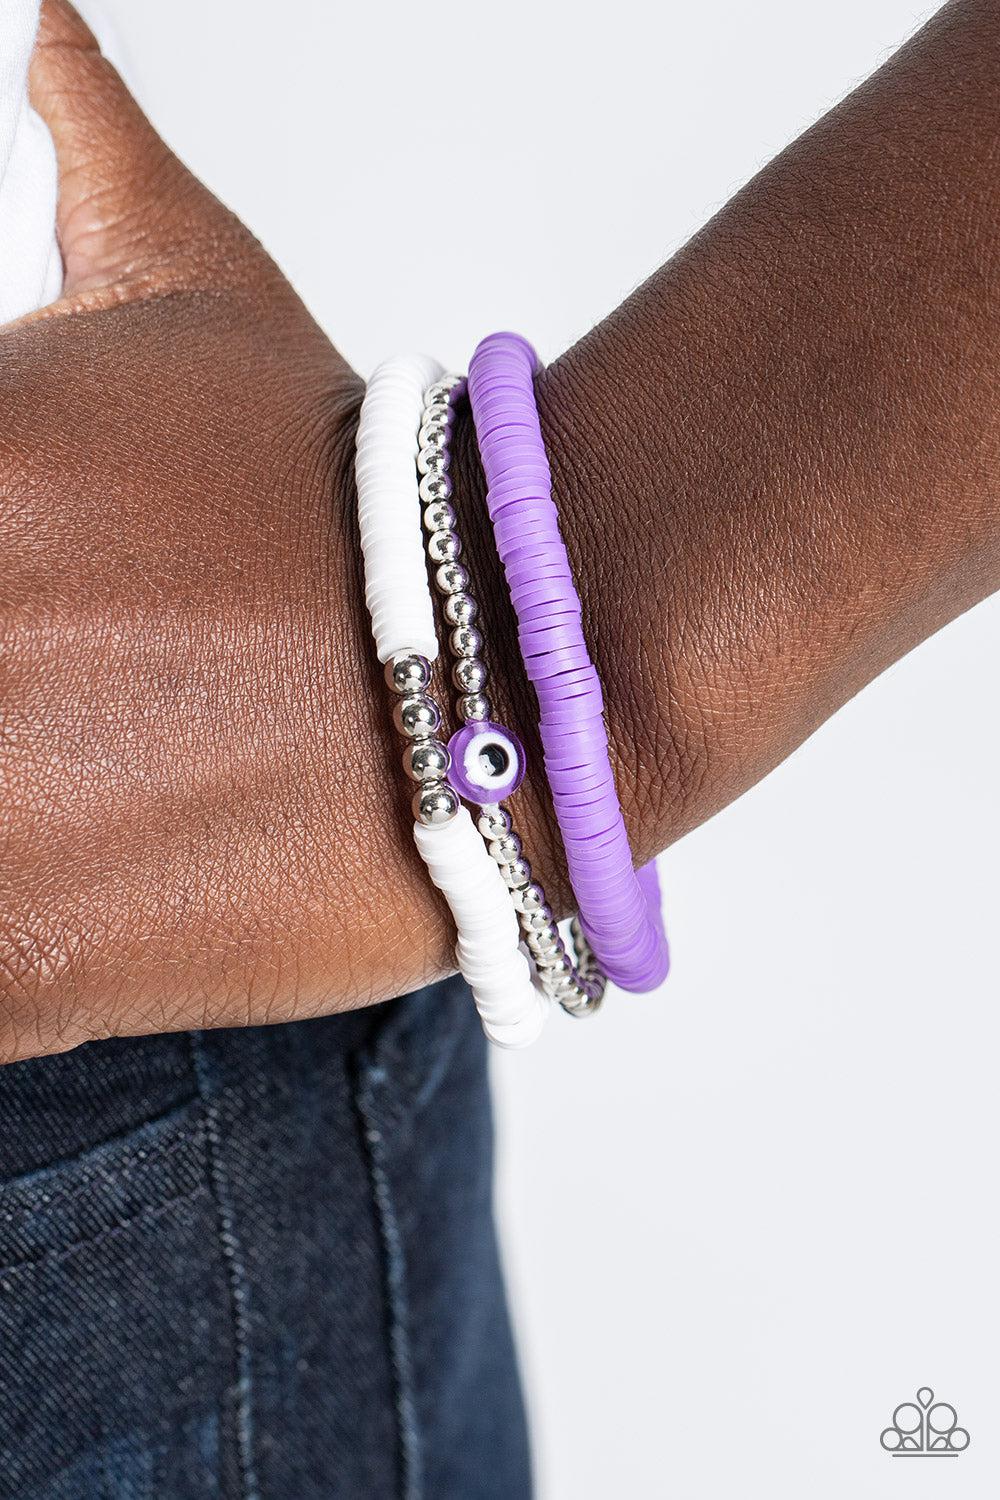 EYE Have A Dream Purple Bracelet - Paparazzi Accessories- lightbox - CarasShop.com - $5 Jewelry by Cara Jewels